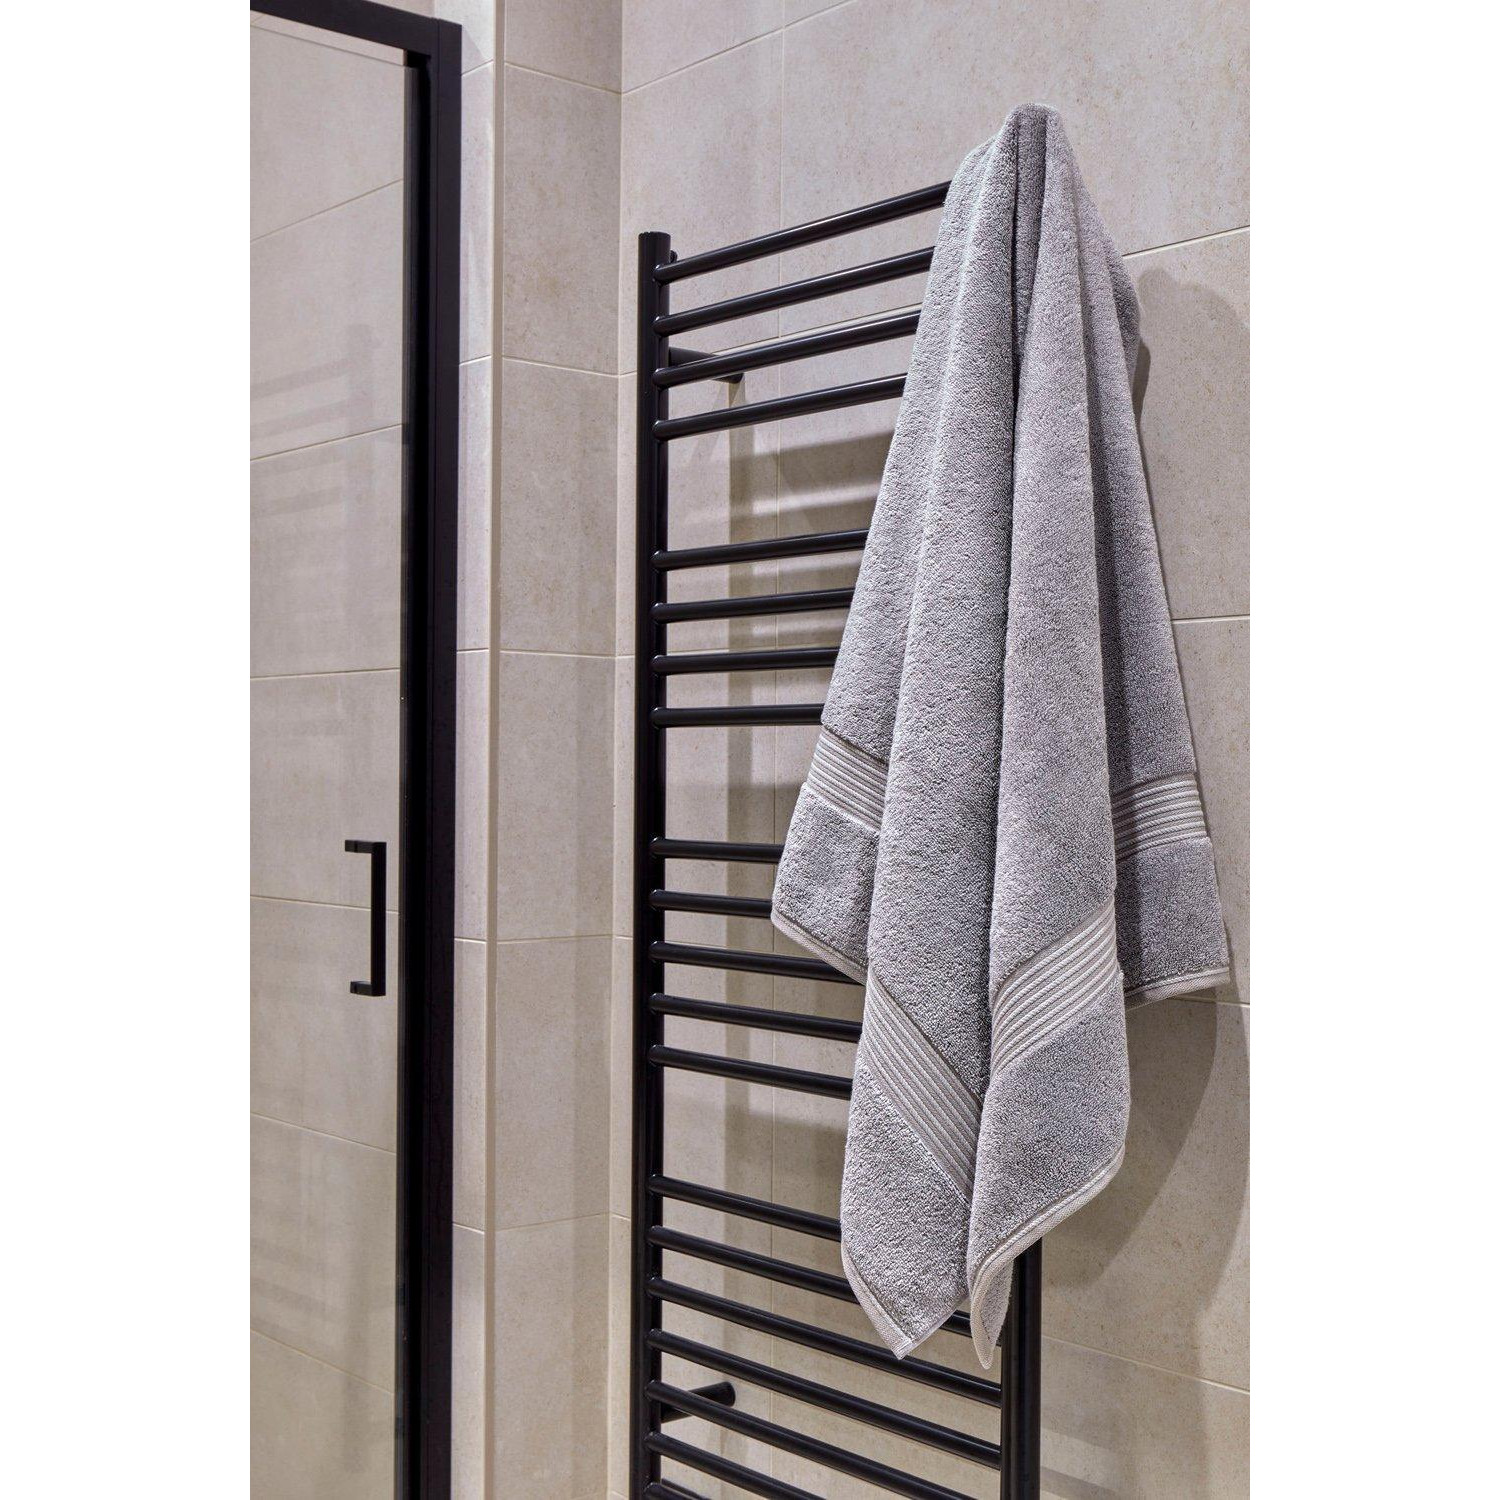 'Supreme Hygro' Luxury 100% Supima Cotton Towels - image 1